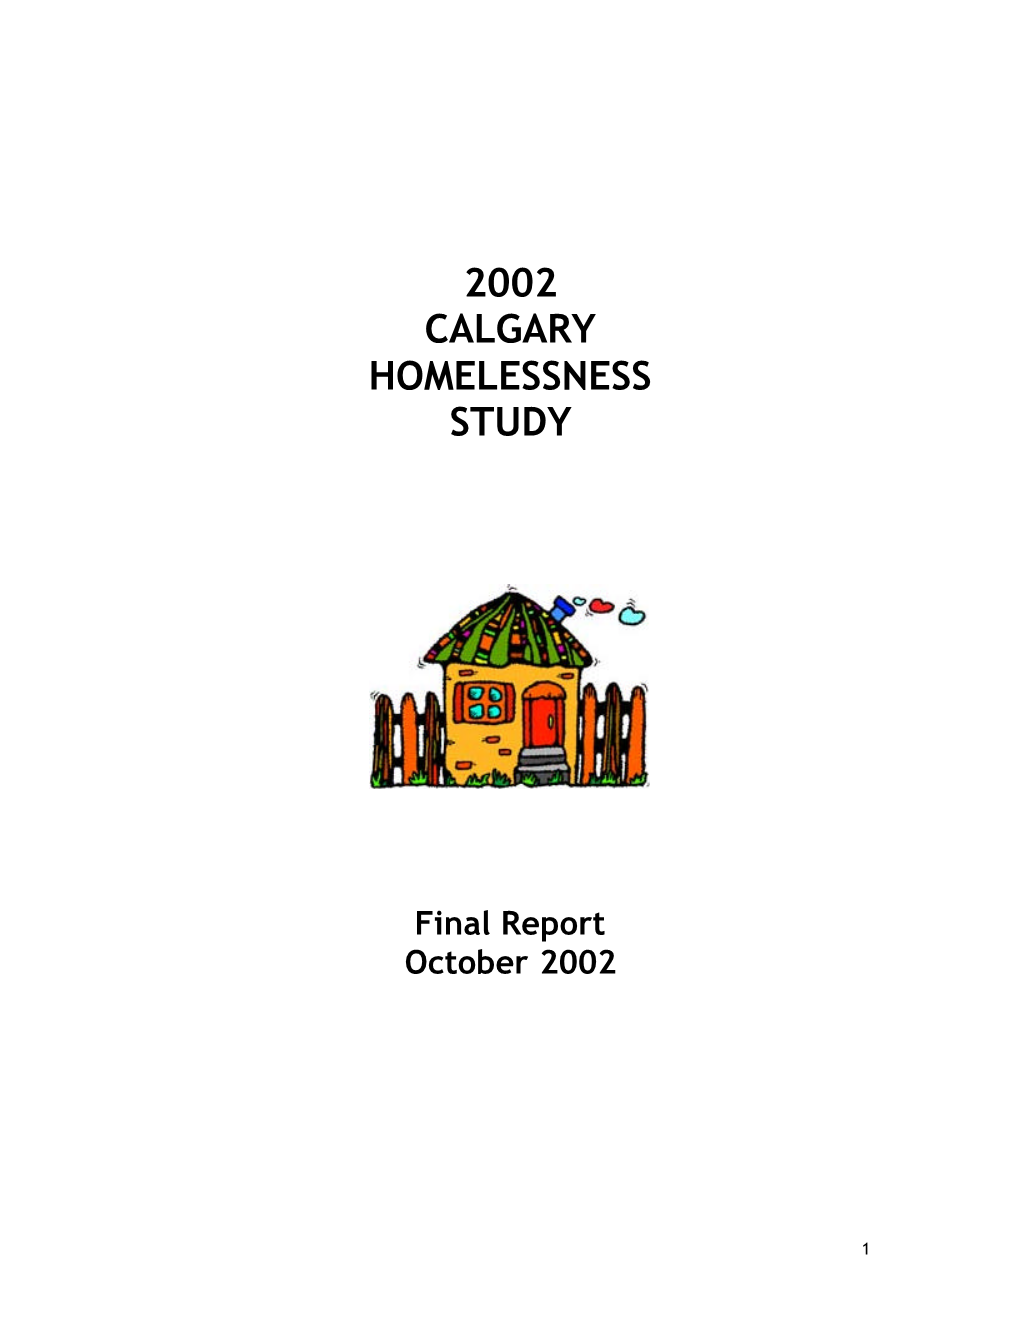 2002 Calgary Homelessness Study